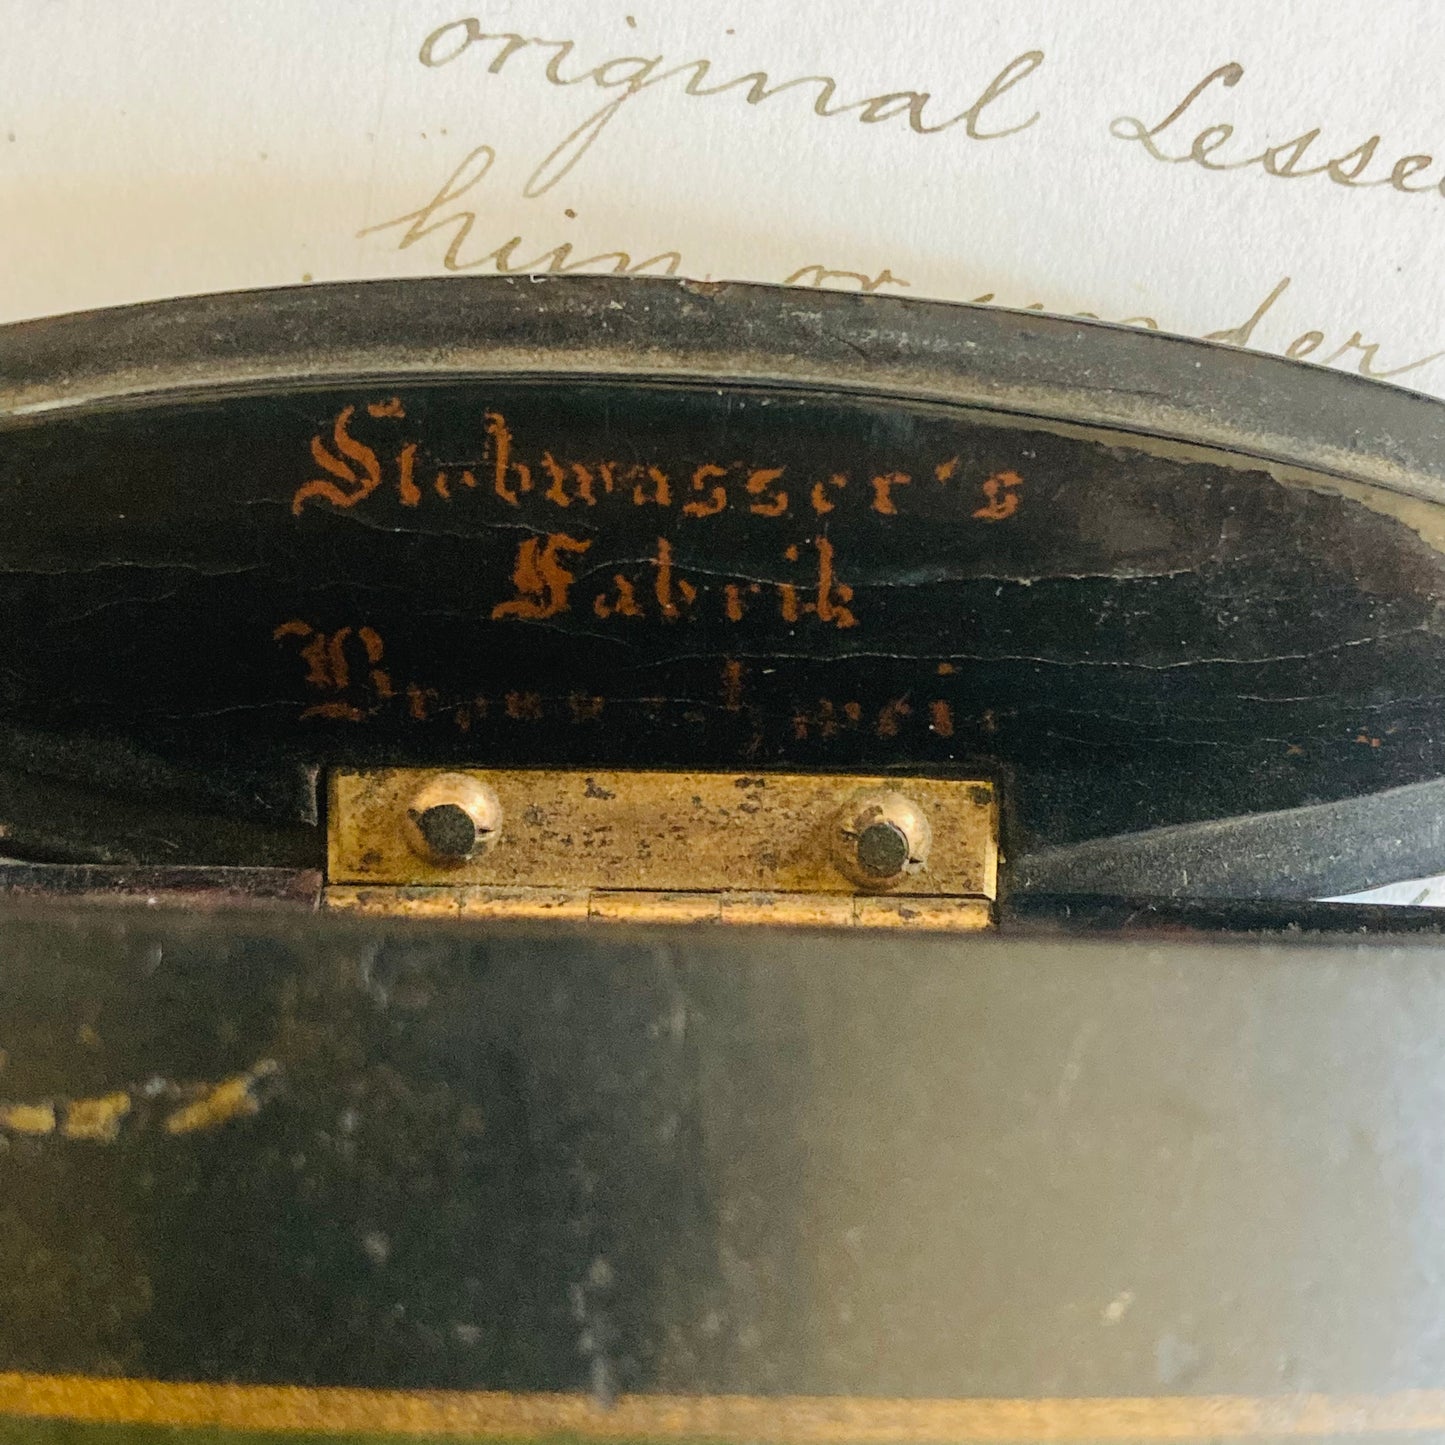 Antique Lacquer Paper Mache Cigar Box by Stobwasser